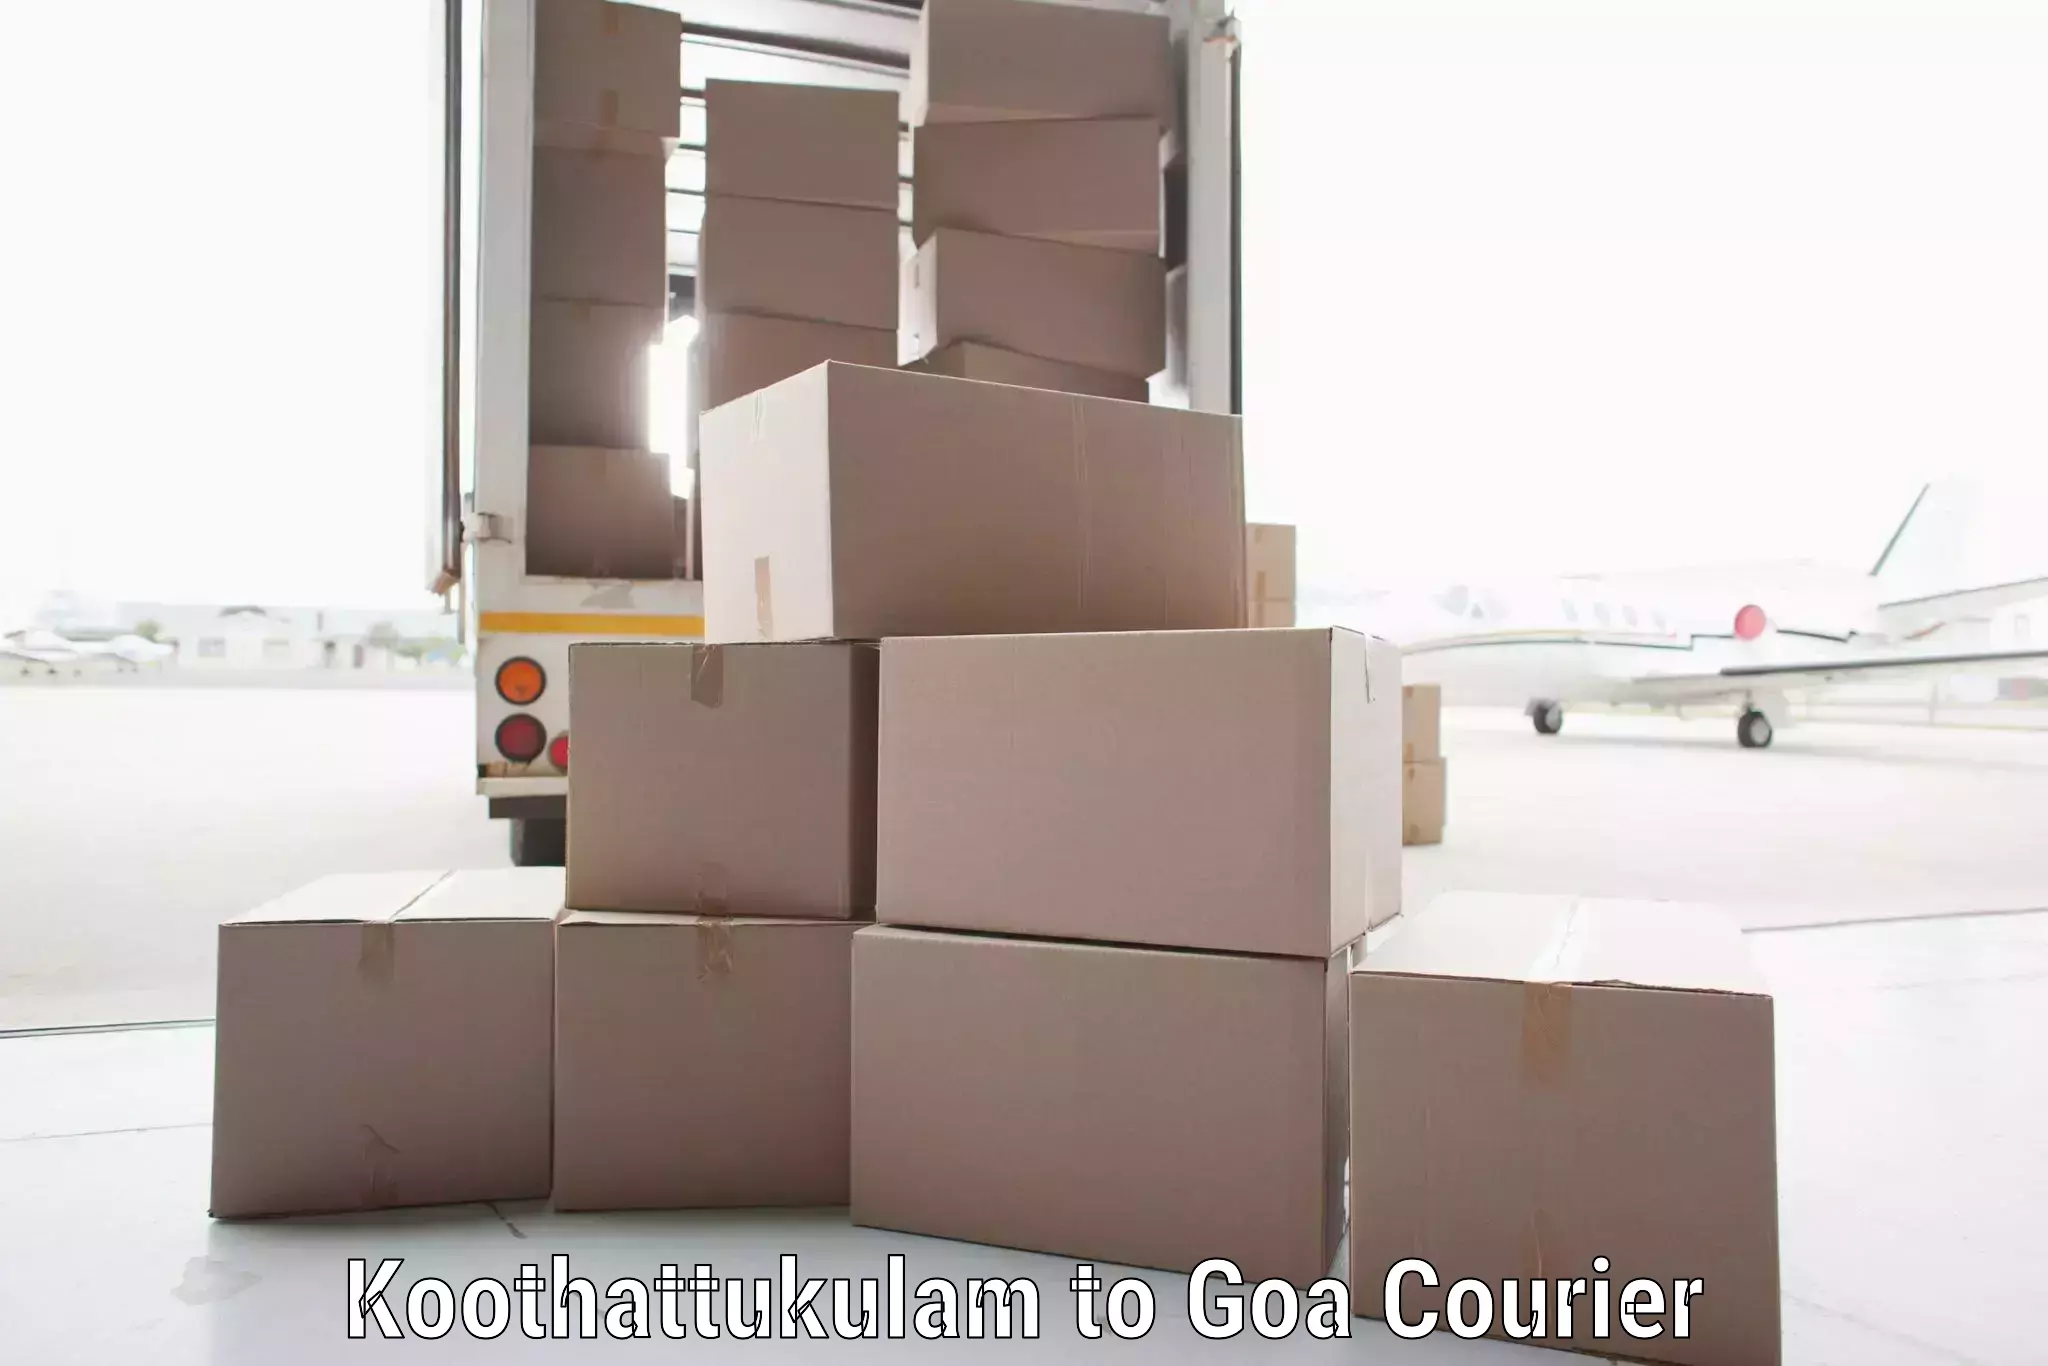 Nationwide delivery network Koothattukulam to South Goa